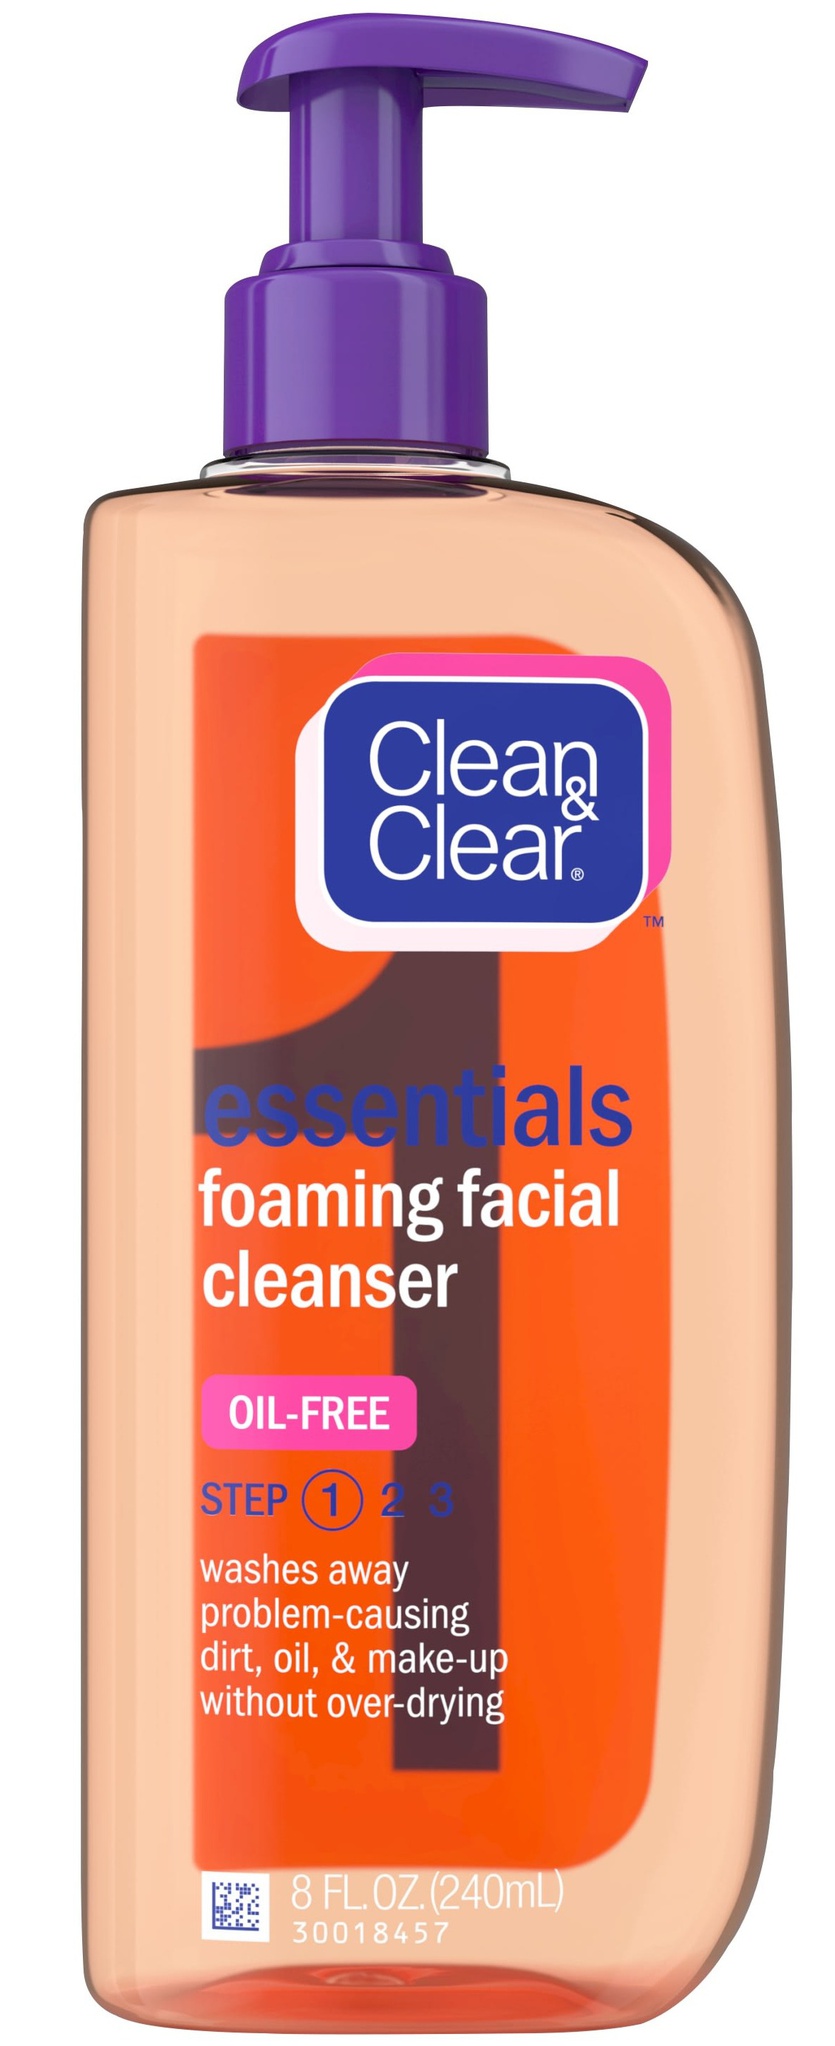 Clean & Clear Foaming Facial Cleanser